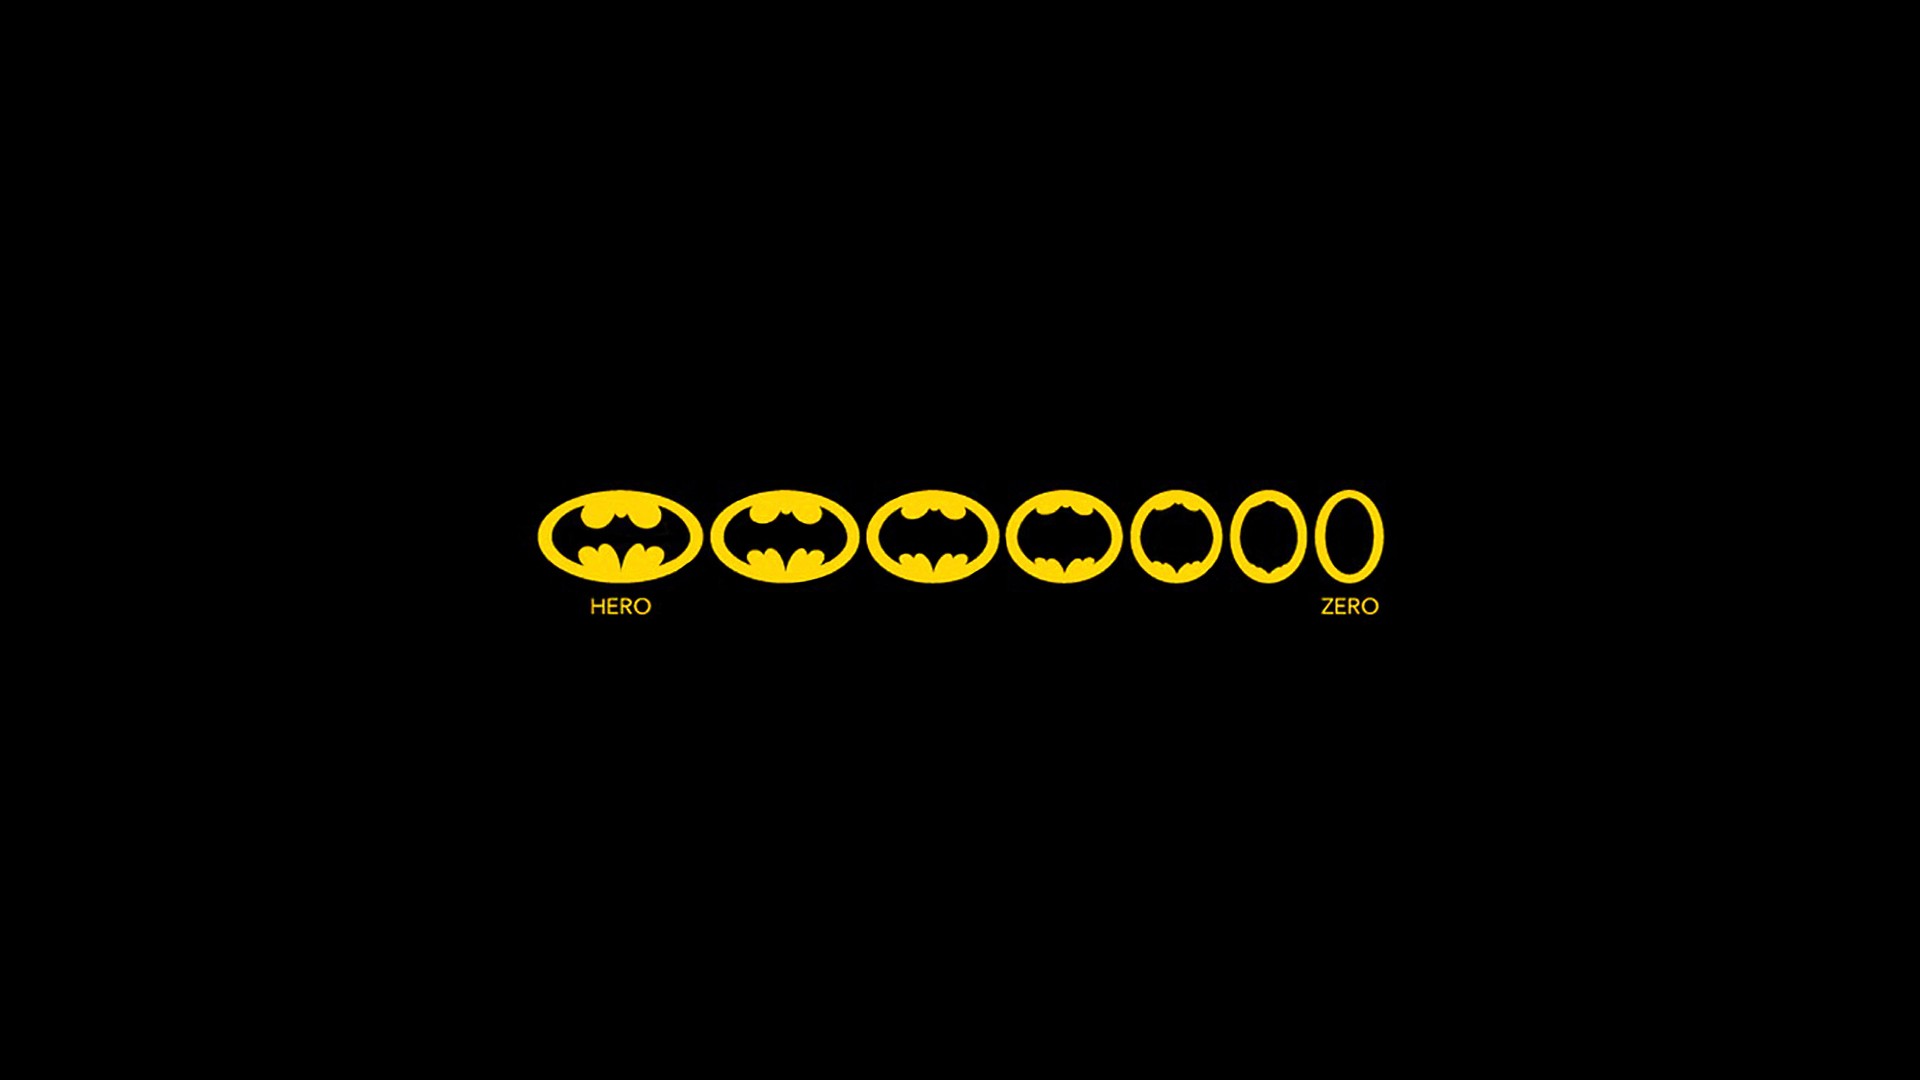 Funny Cool Wallpaper Hero Batman